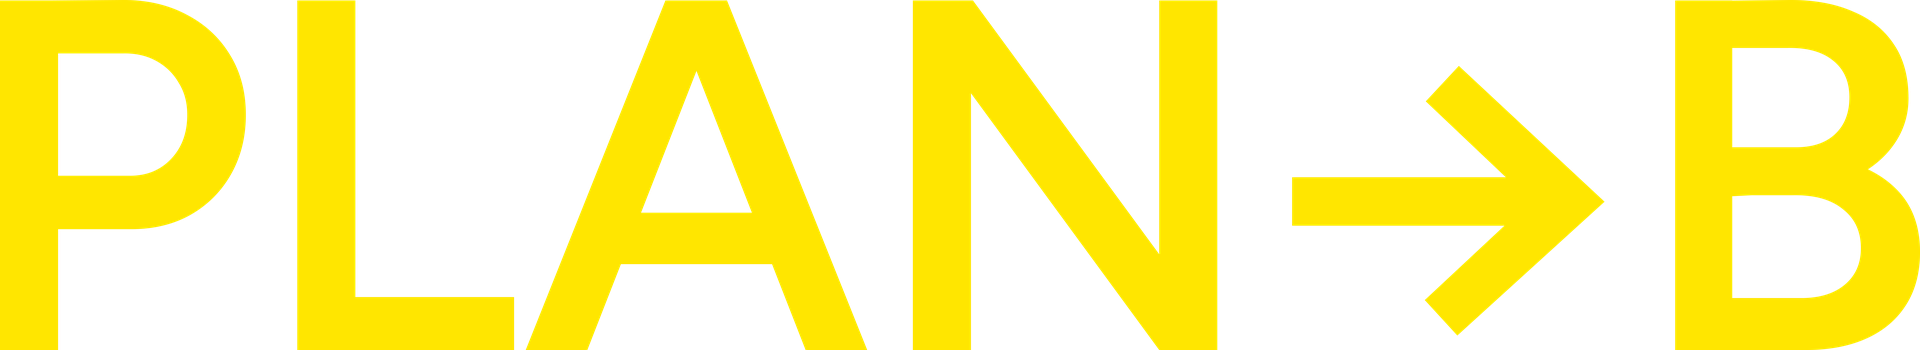 planb-logo